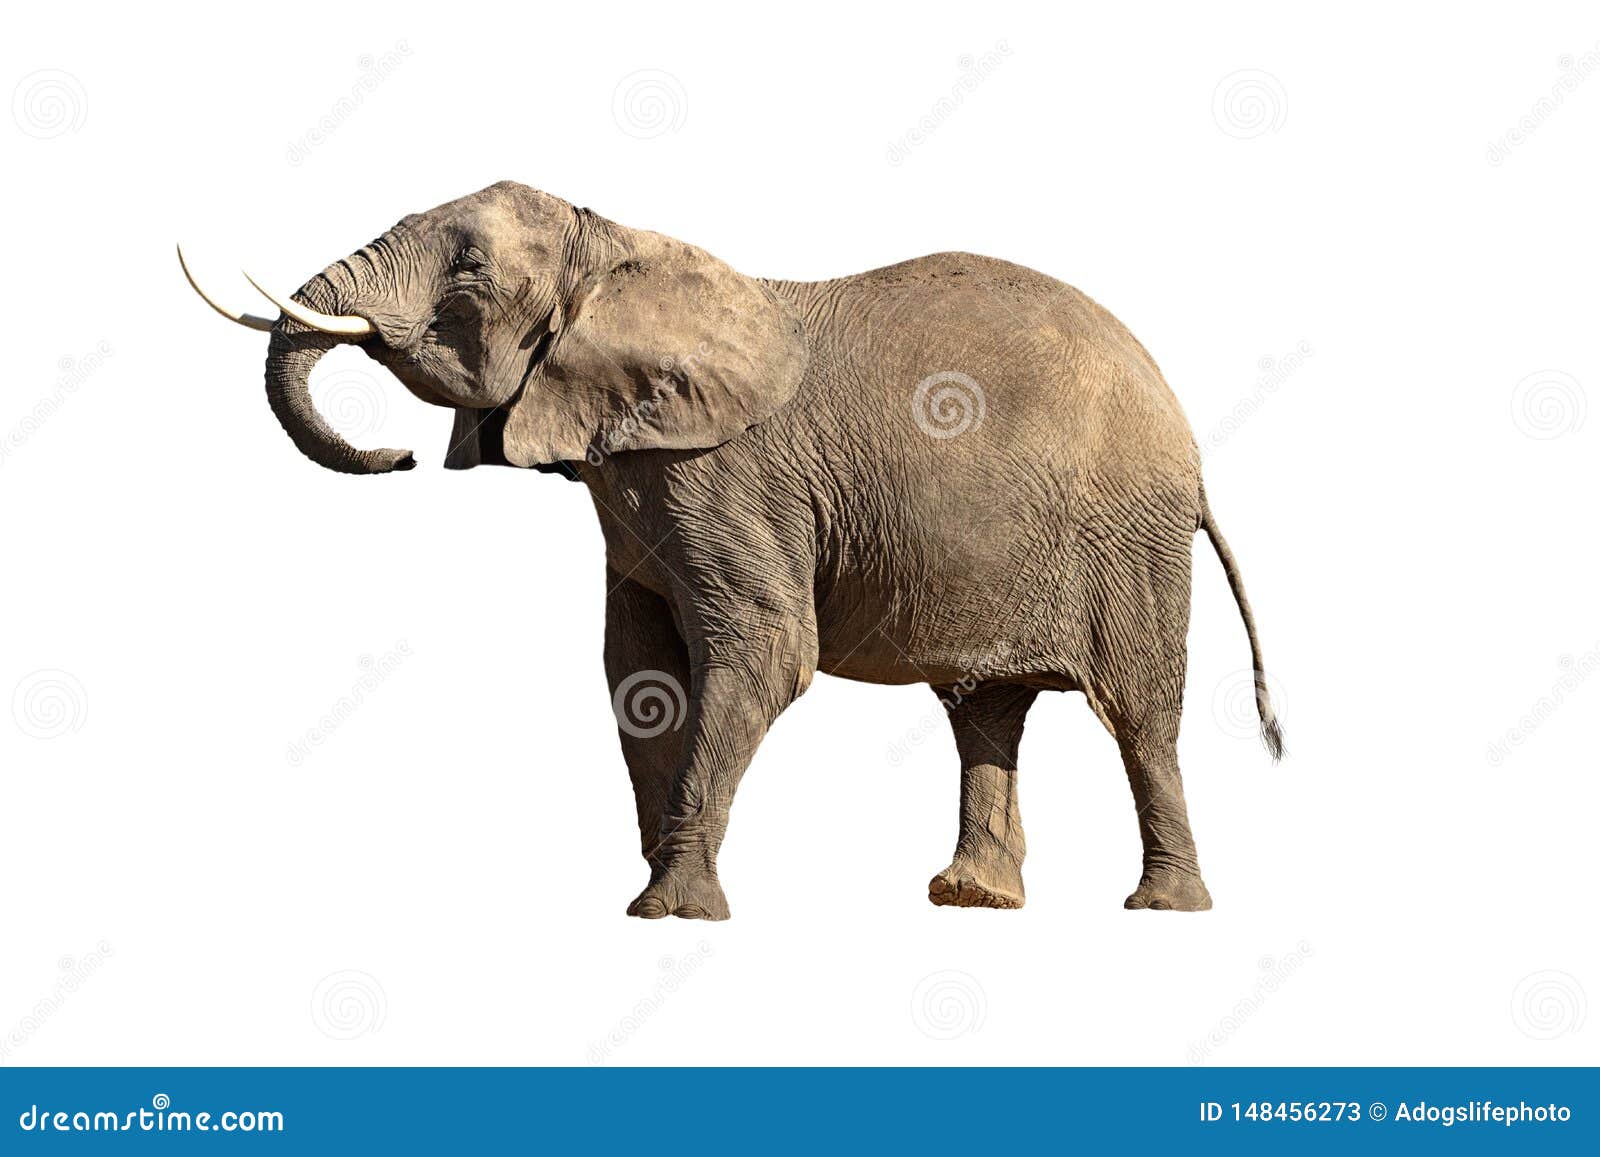  large elephant head up big tusks